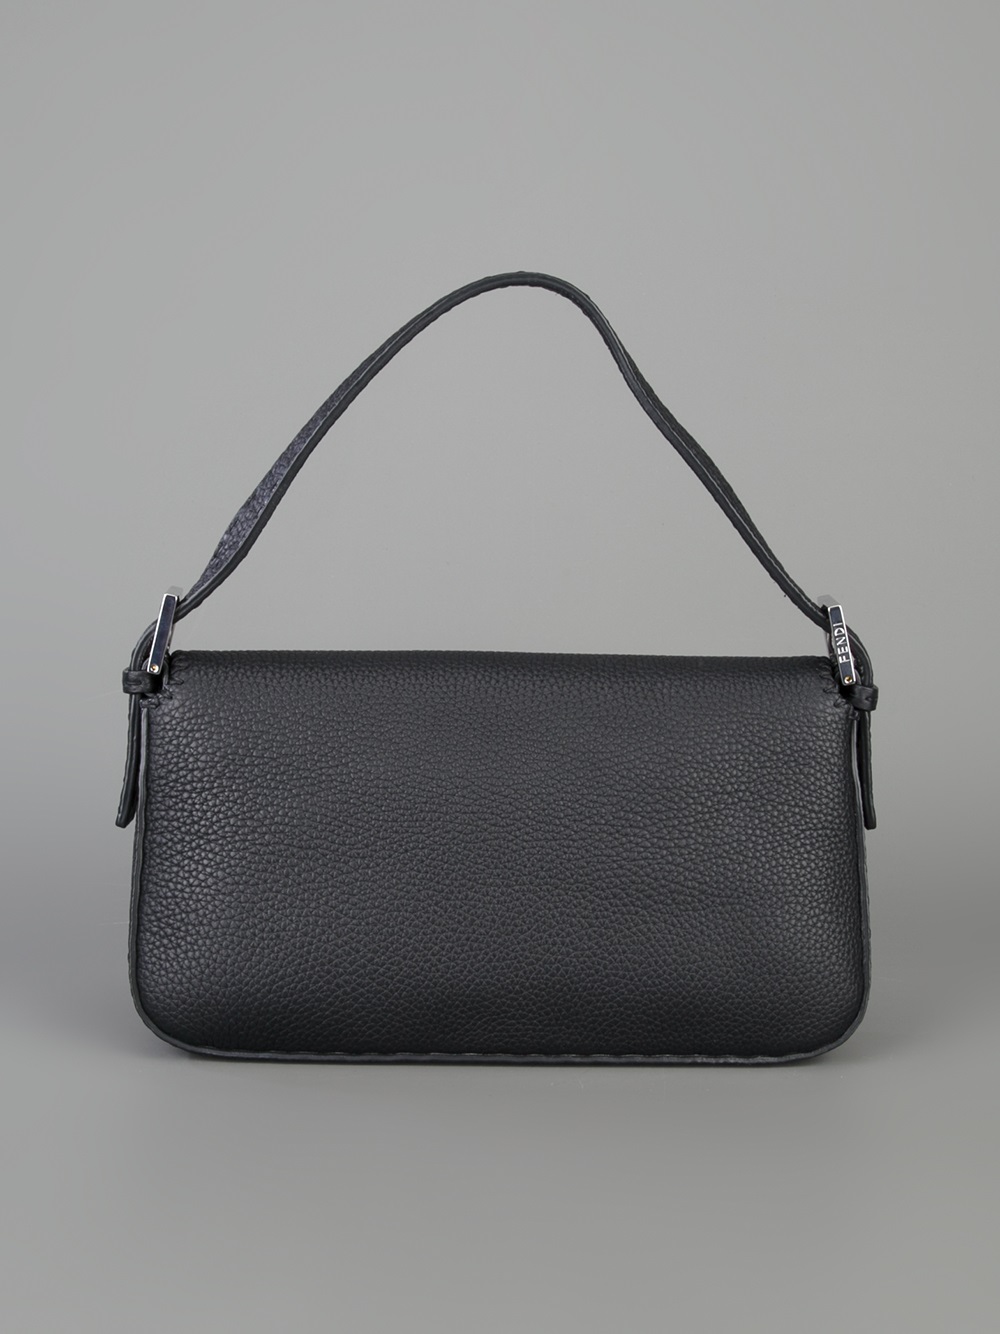 Lyst - Fendi Selleria Baguette Bag in Black